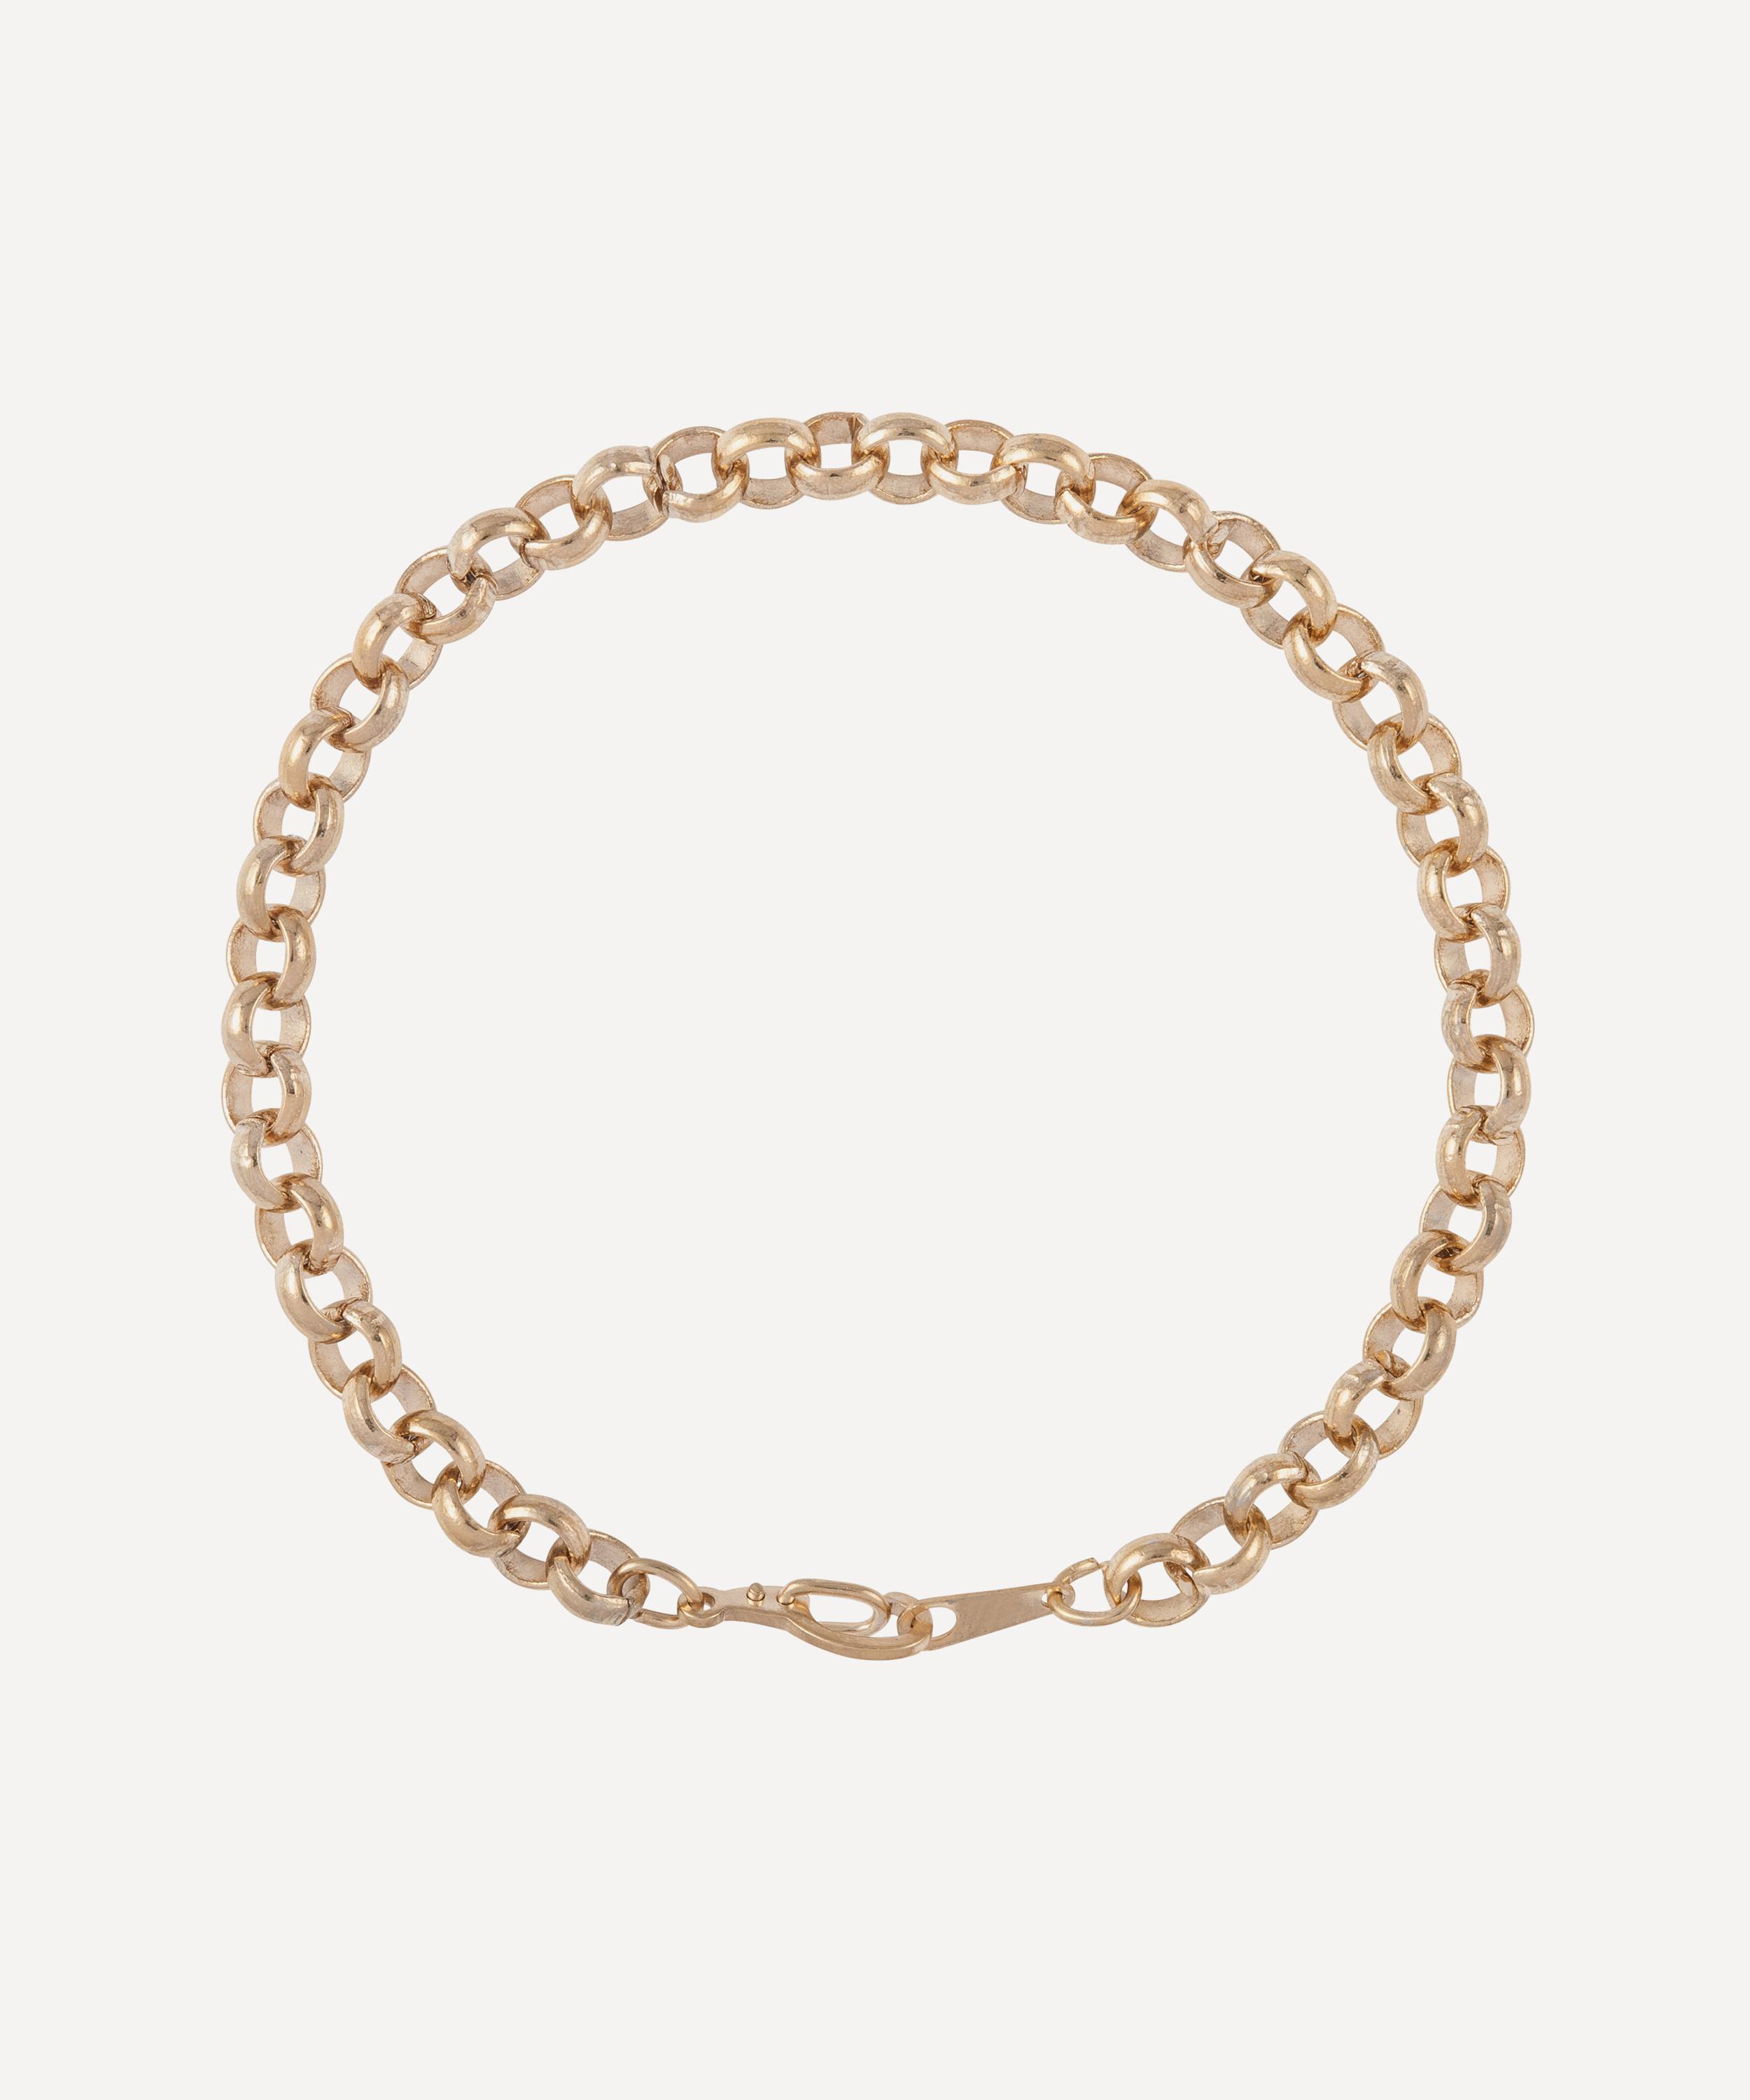 Susan Caplan Vintage Gold-Plated 1990s Belcher Chain Bracelet | Liberty